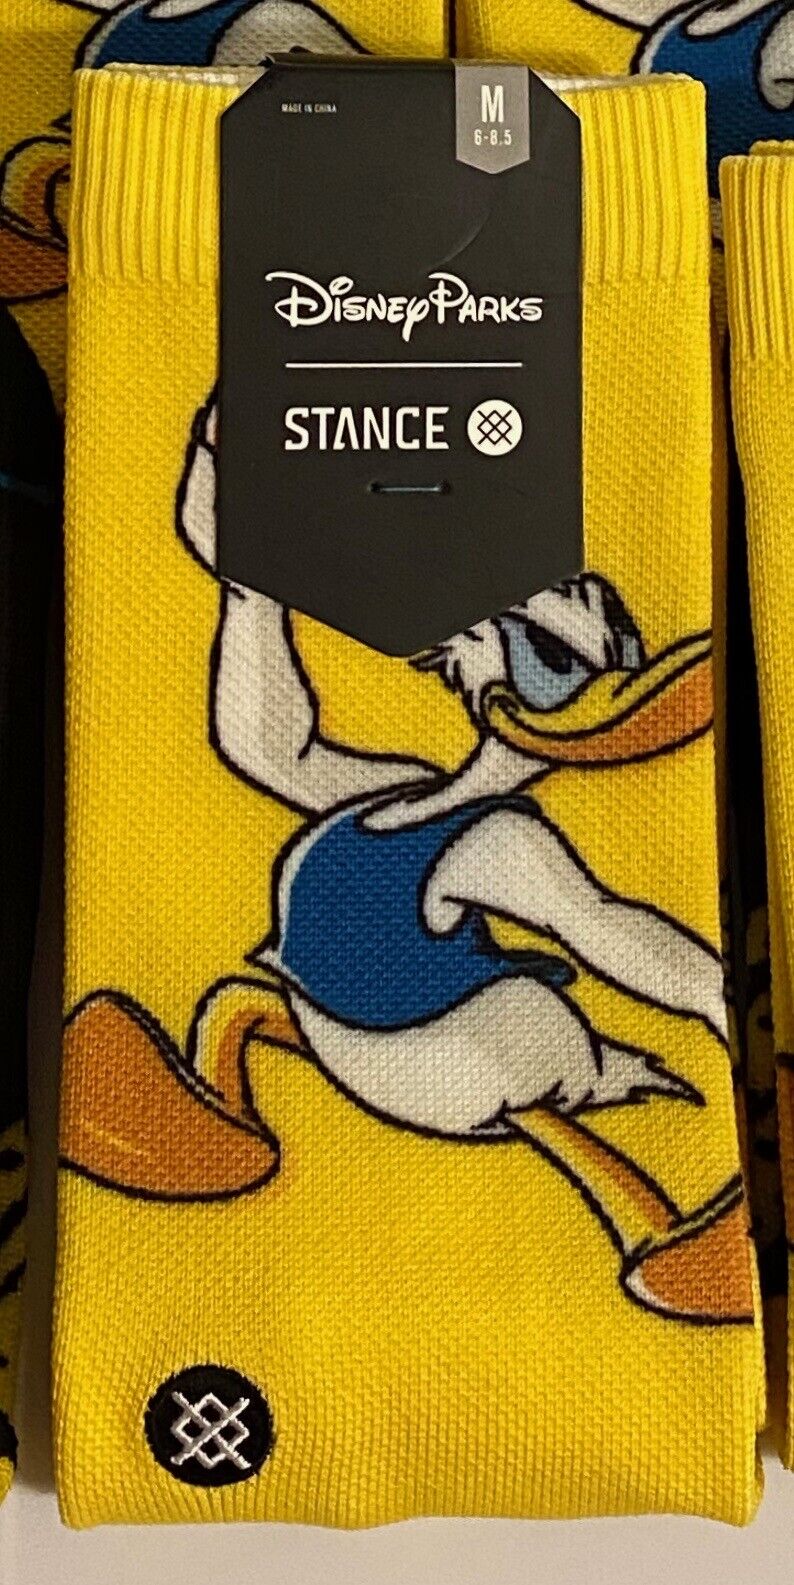 NWT Disney Parks STANCE NBA Experience Donald Duck Crew Socks Adult Medium 6-8.5